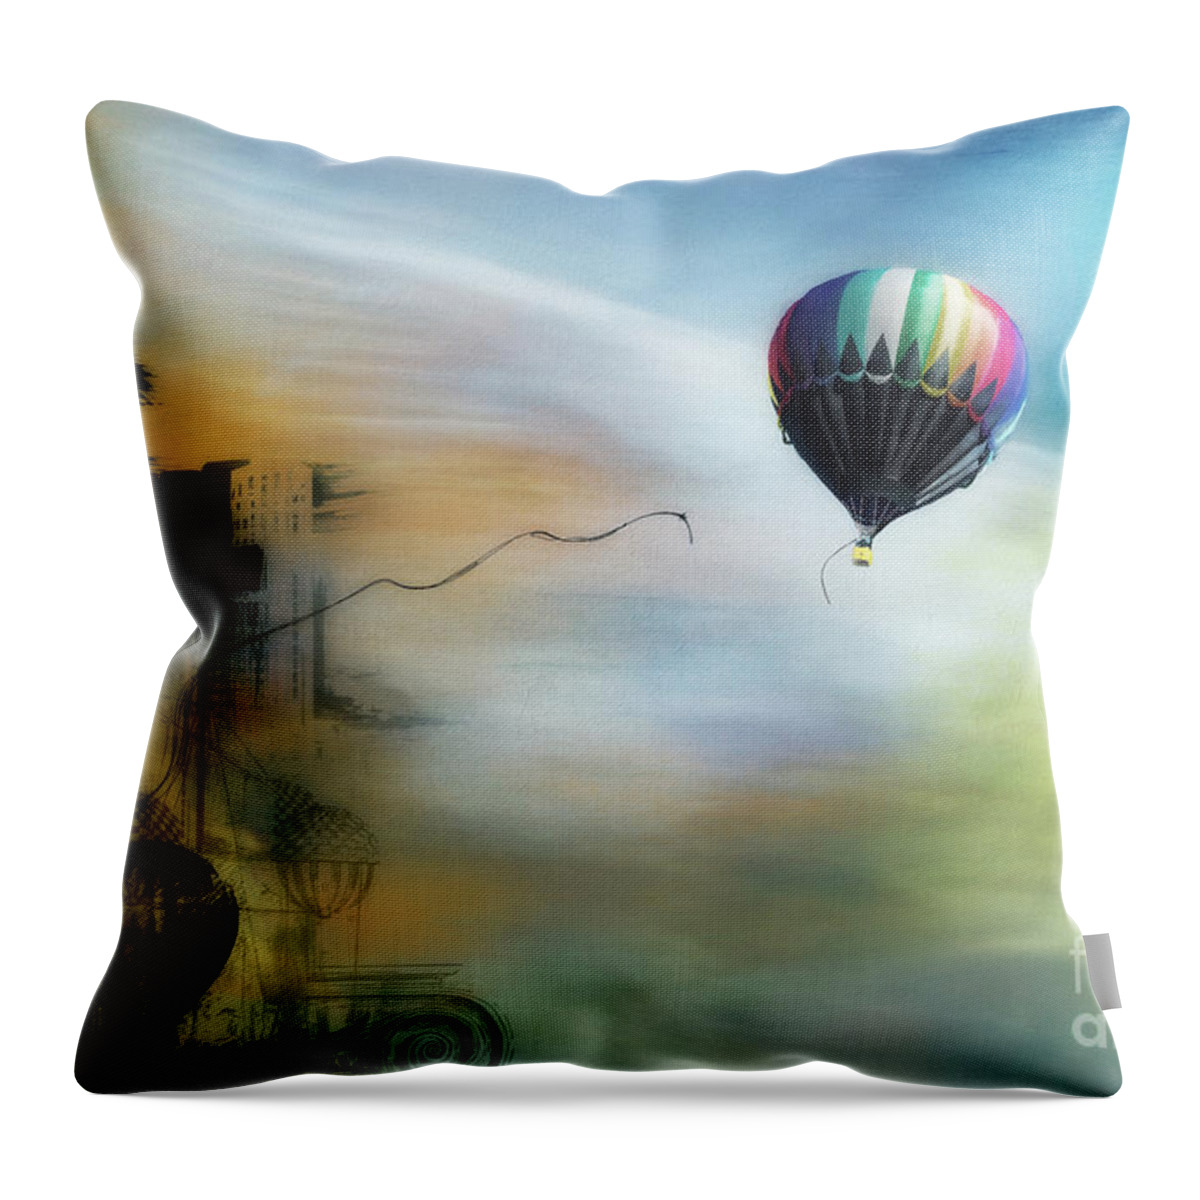 Balloons Throw Pillow featuring the photograph Escape by John Strong